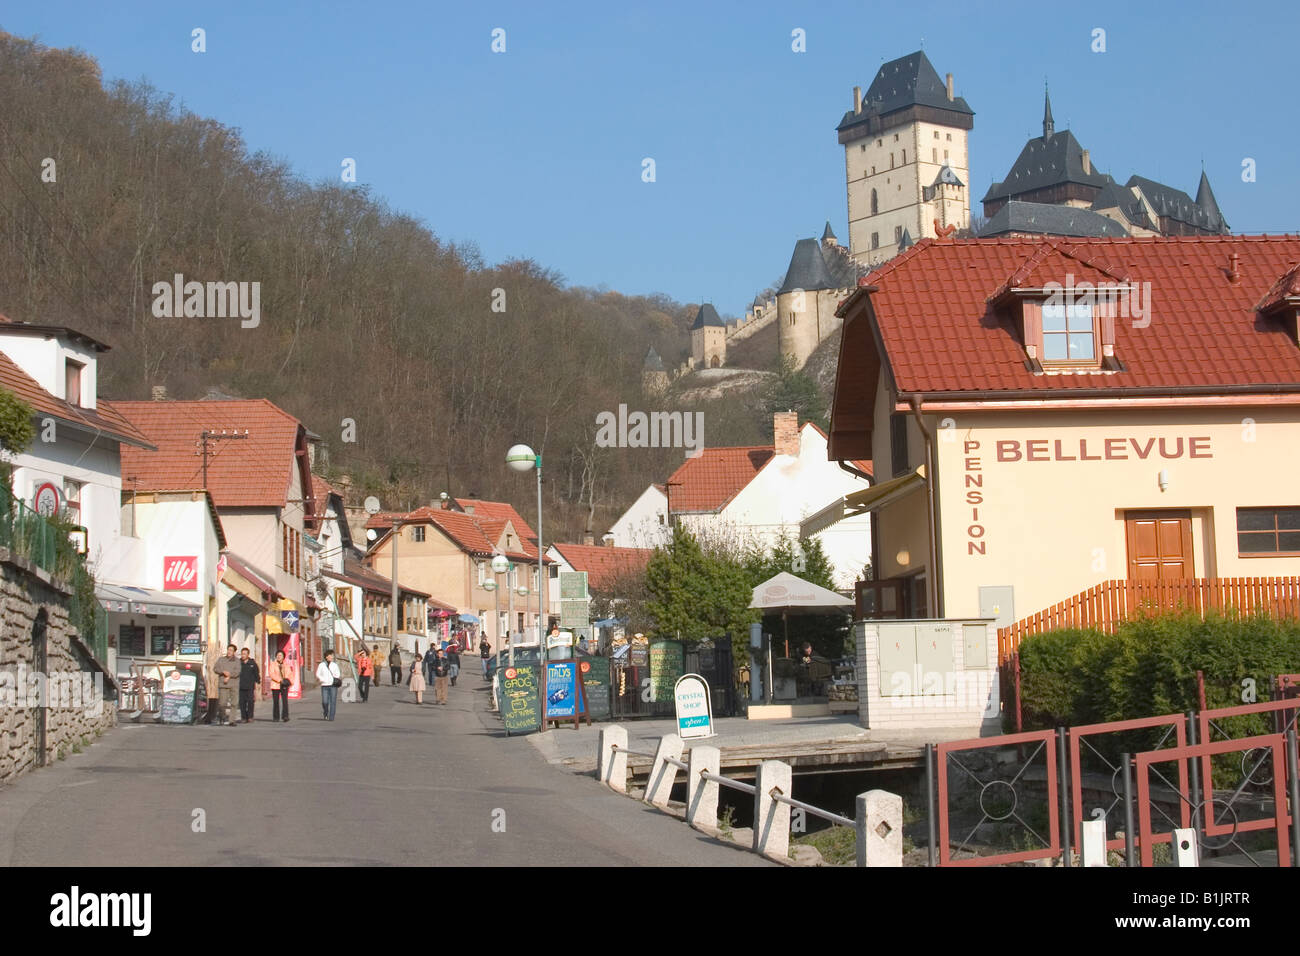 A street scene in Karlstein, near Prague, in Czech Republic, showing Karlstein Castle. Stock Photo